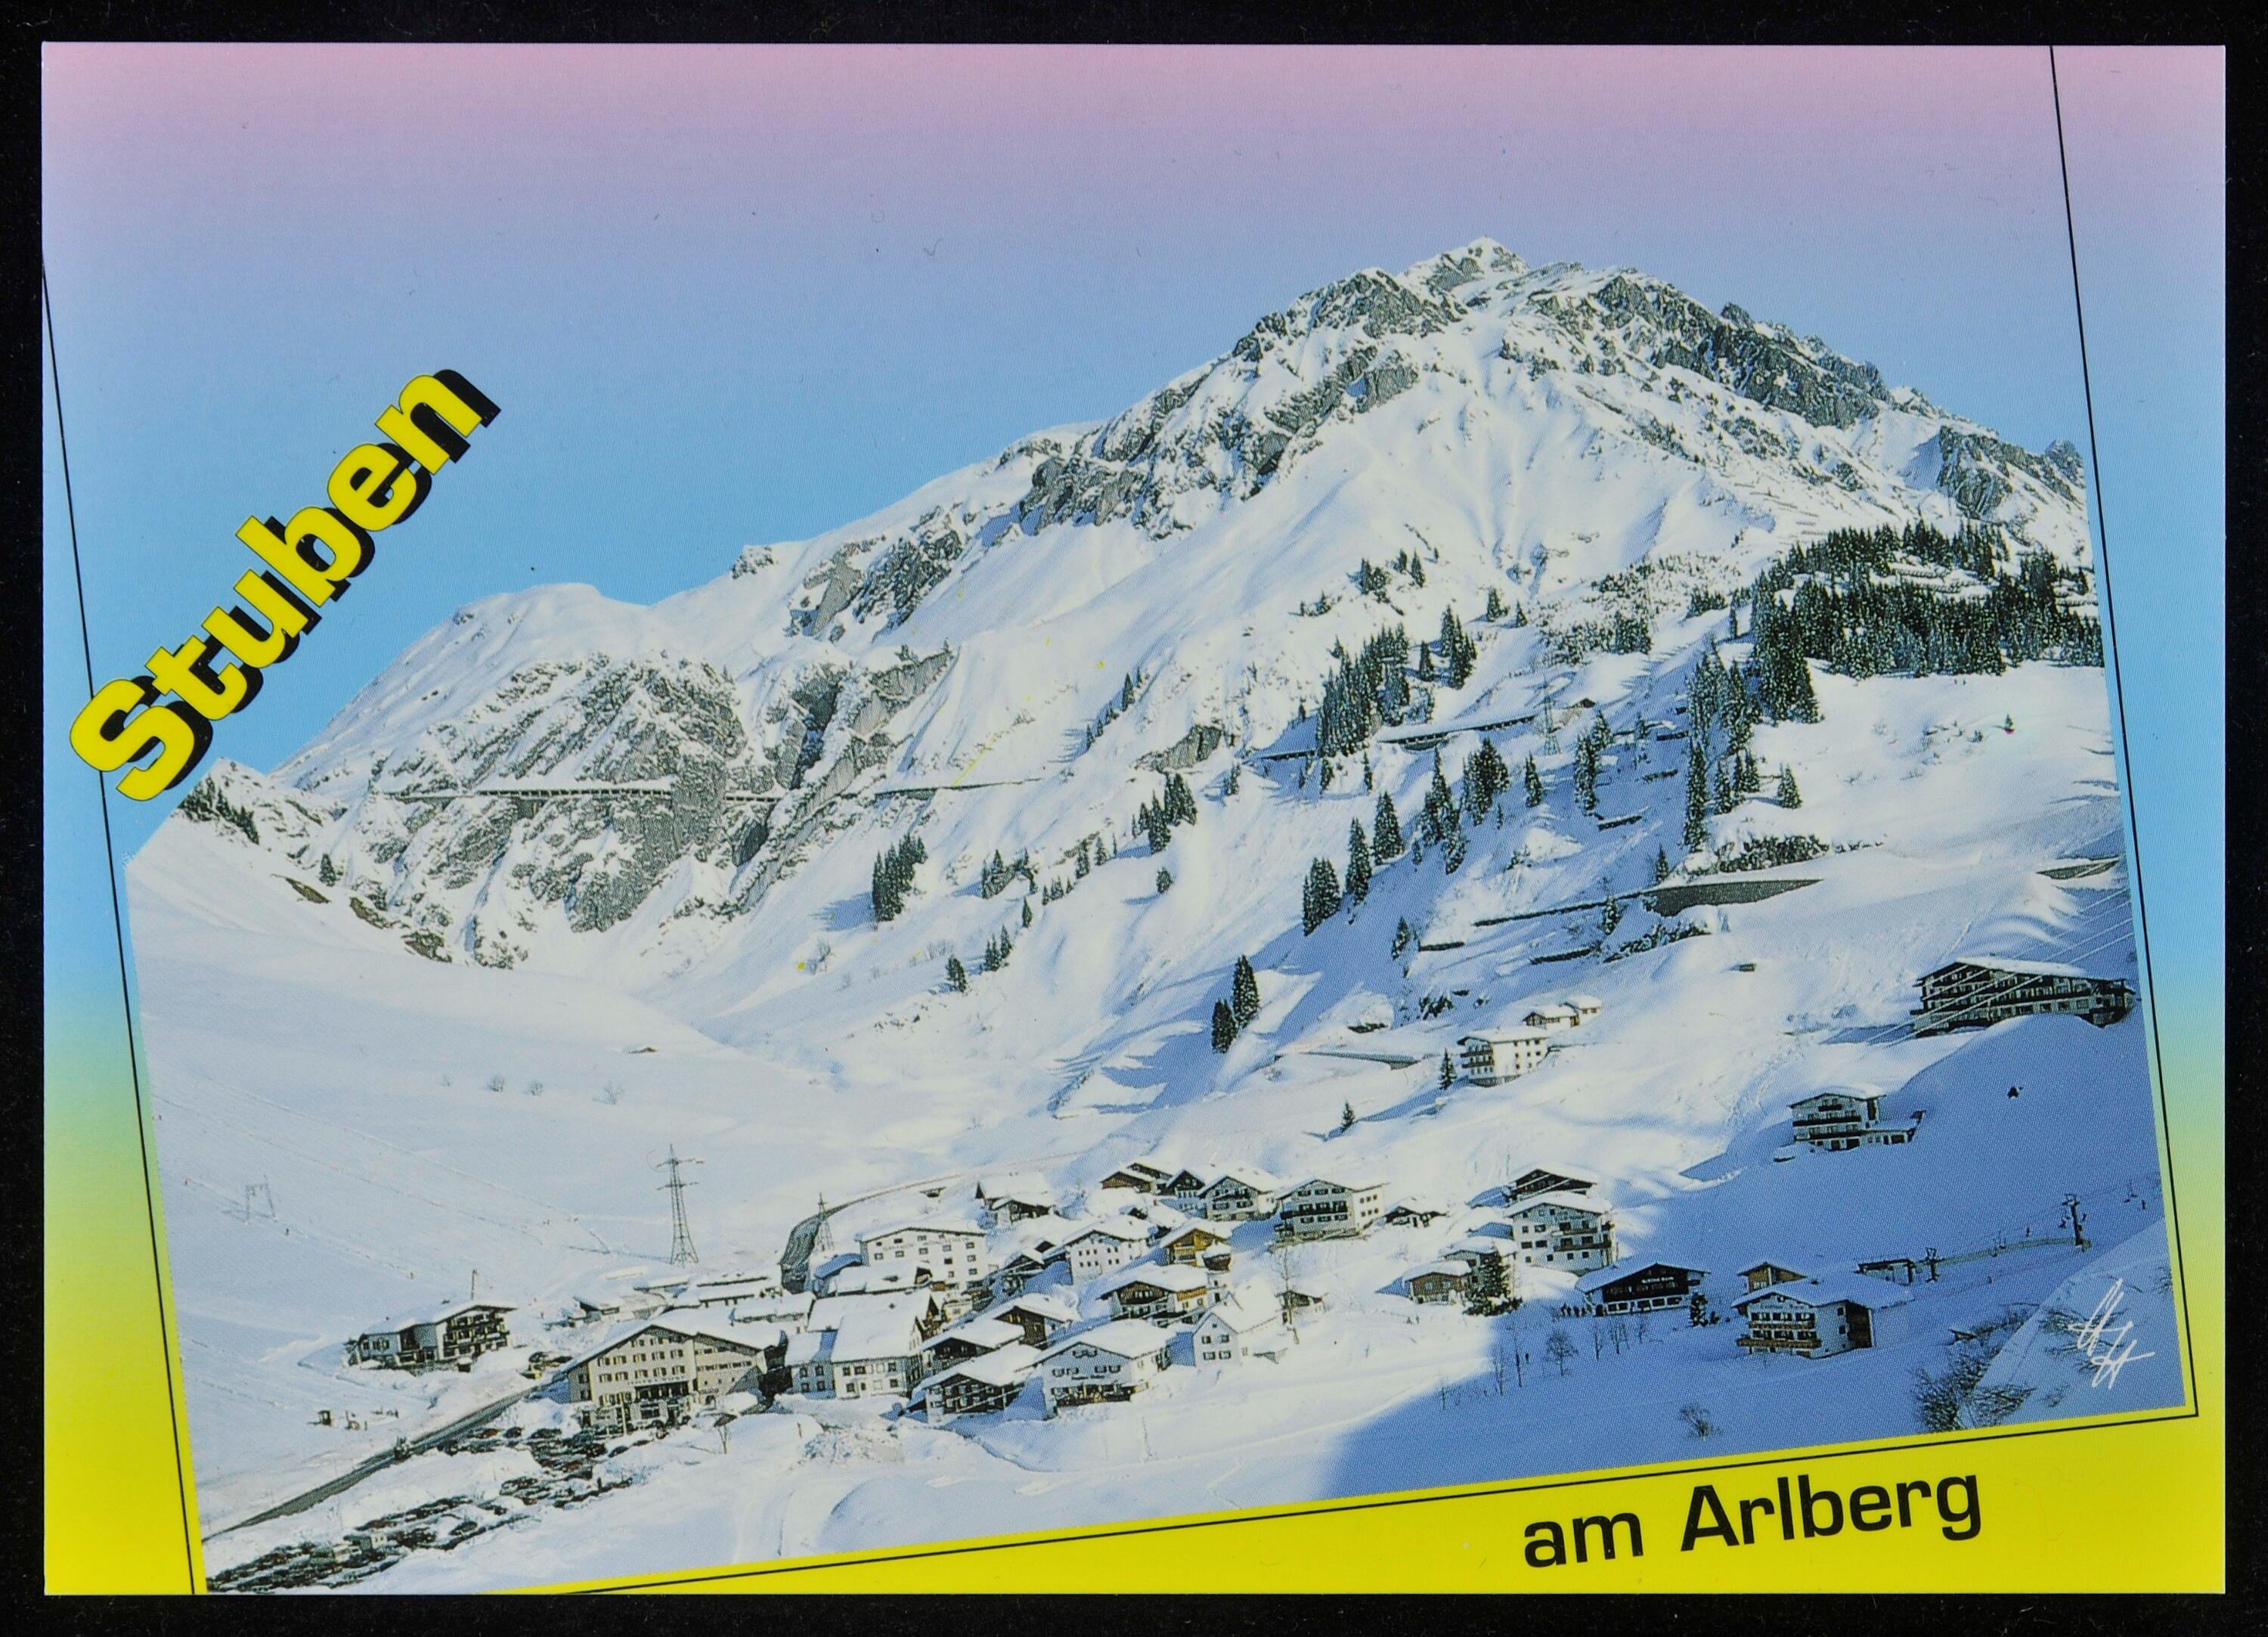 [Klösterle] Stuben am Arlberg></div>


    <hr>
    <div class=